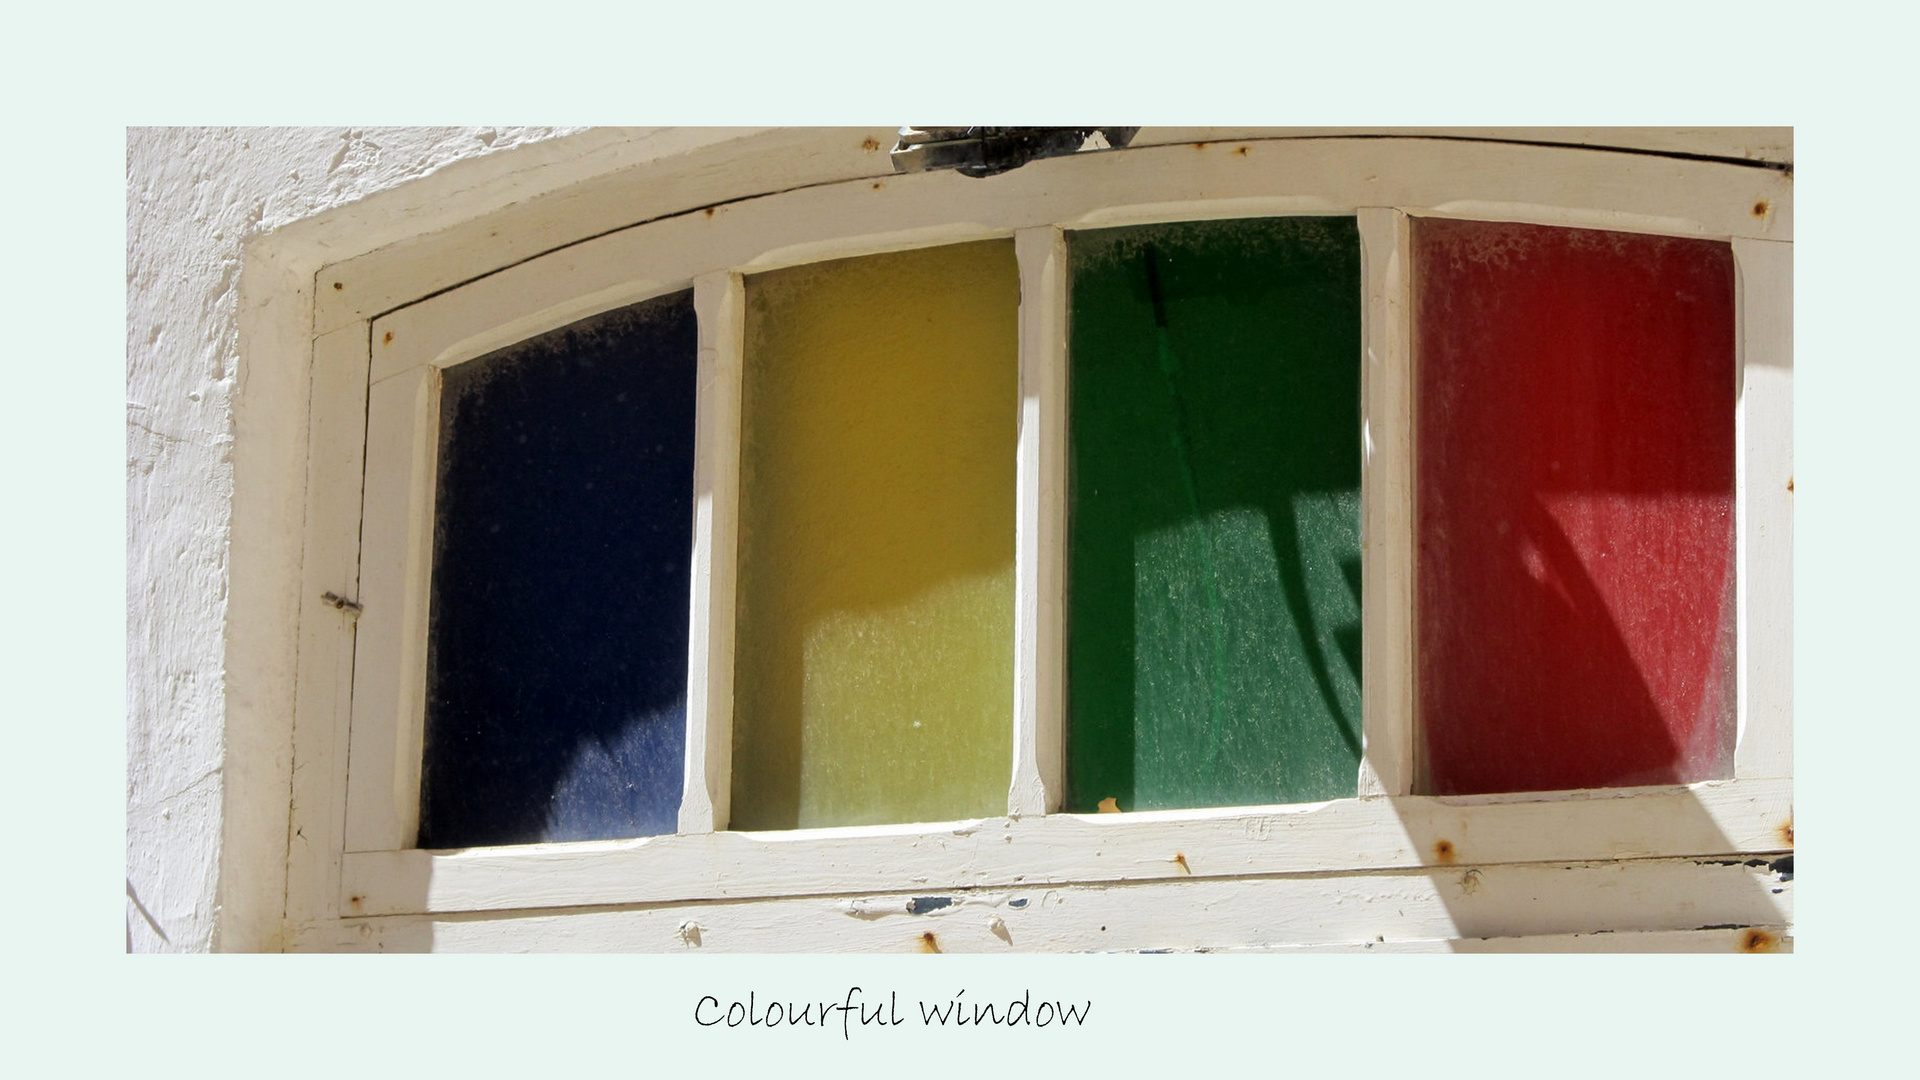 Colourful window